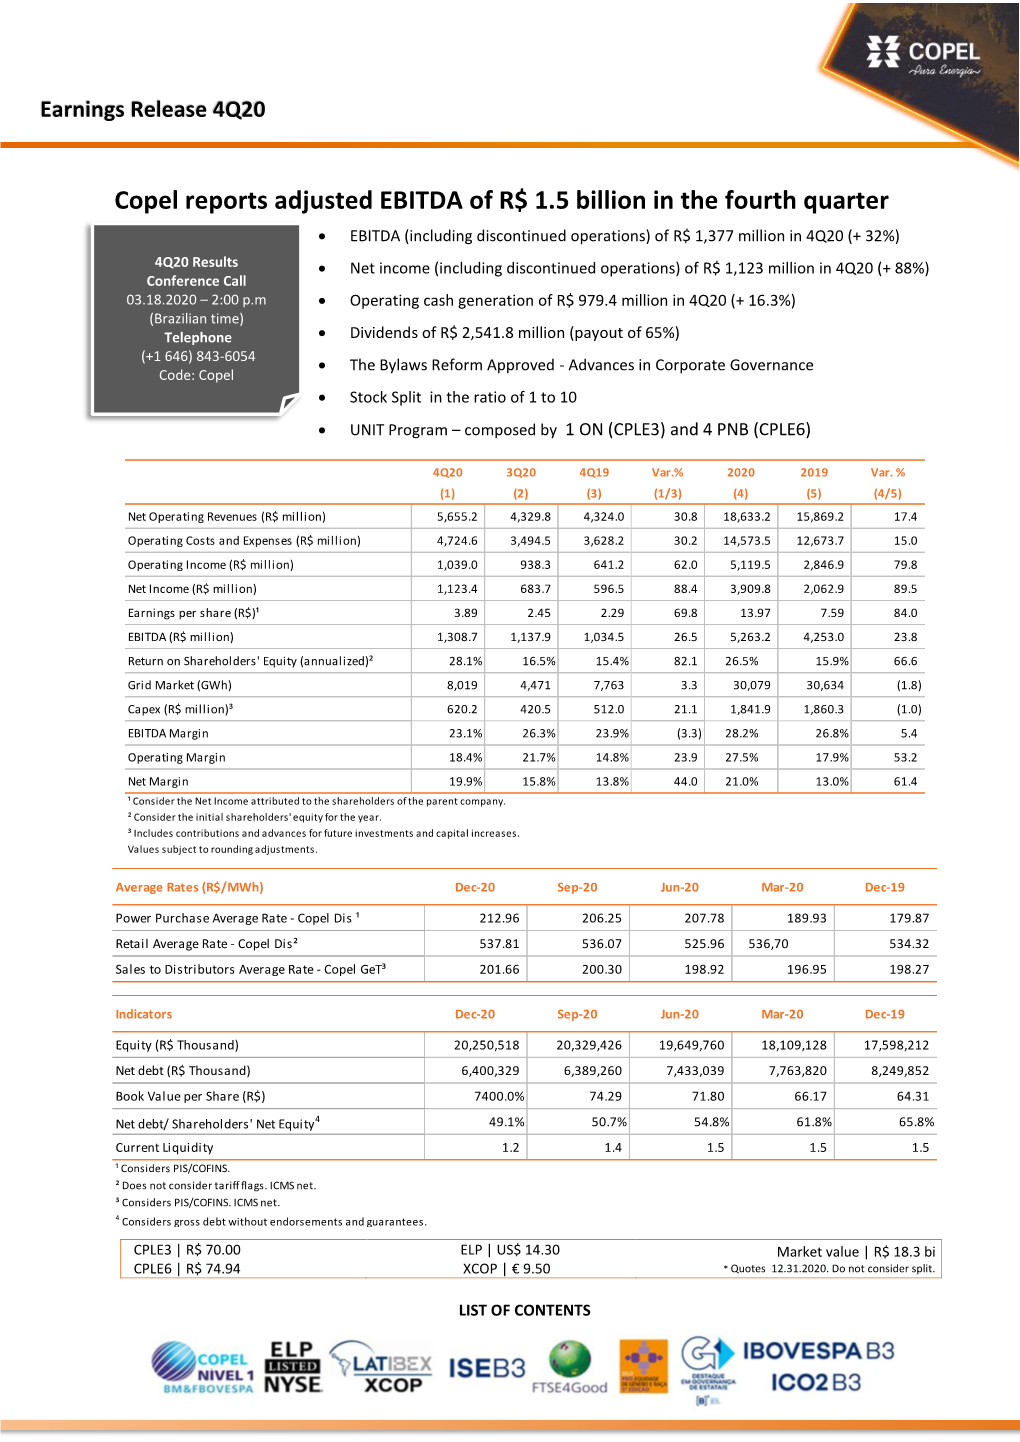 Copel Reports Adjusted EBITDA of R$ 1.5 Billion in the Fourth Quarter